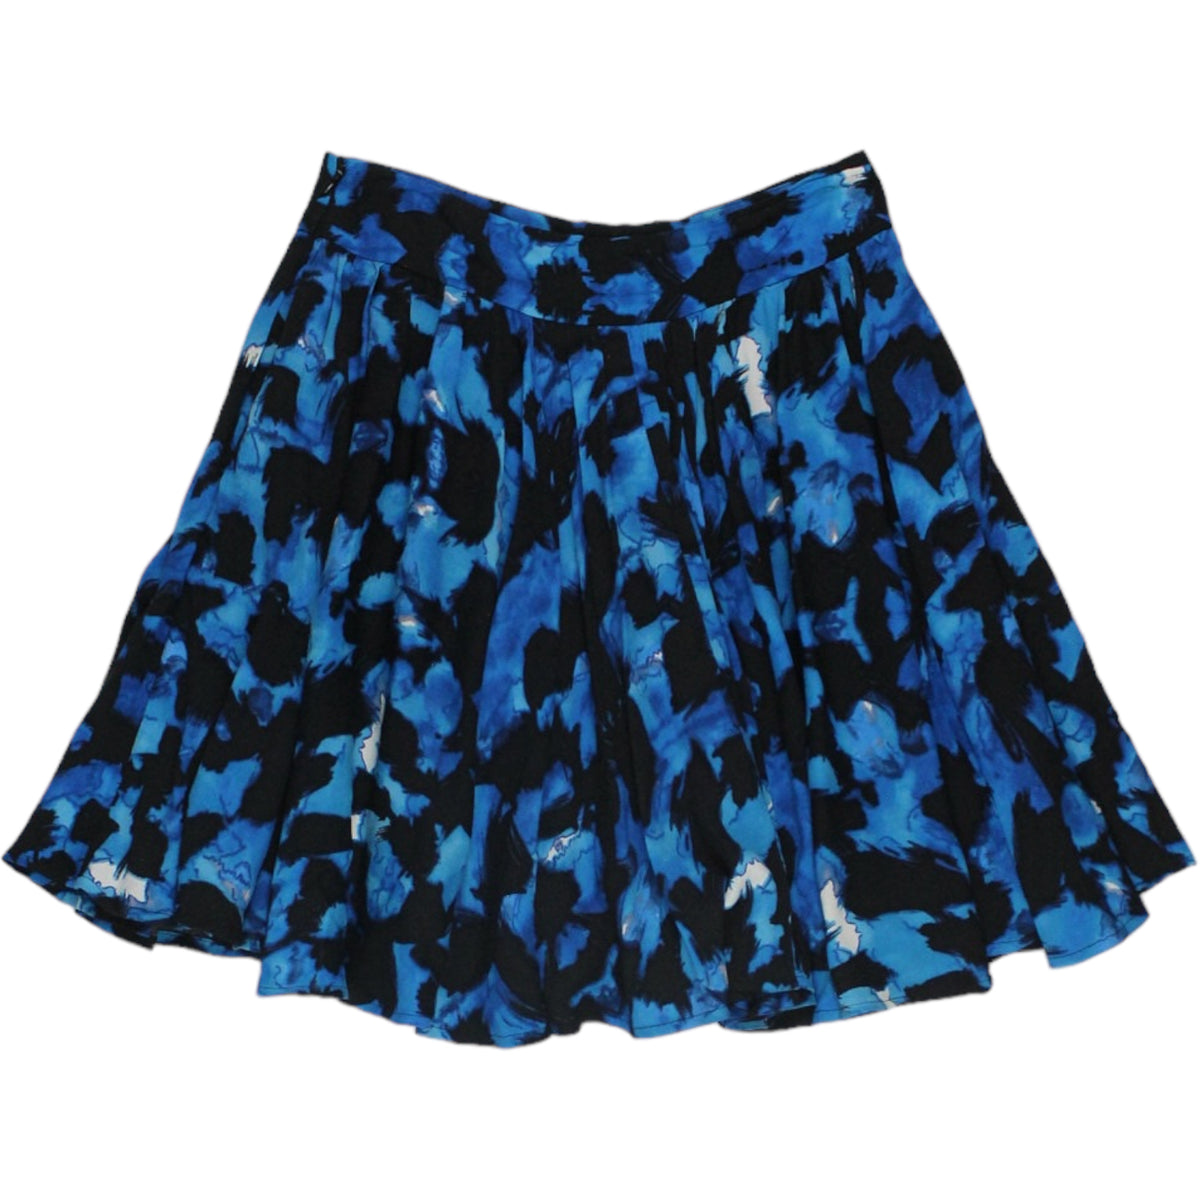 Reiss Blue/Black Floral Print Mini Skirt